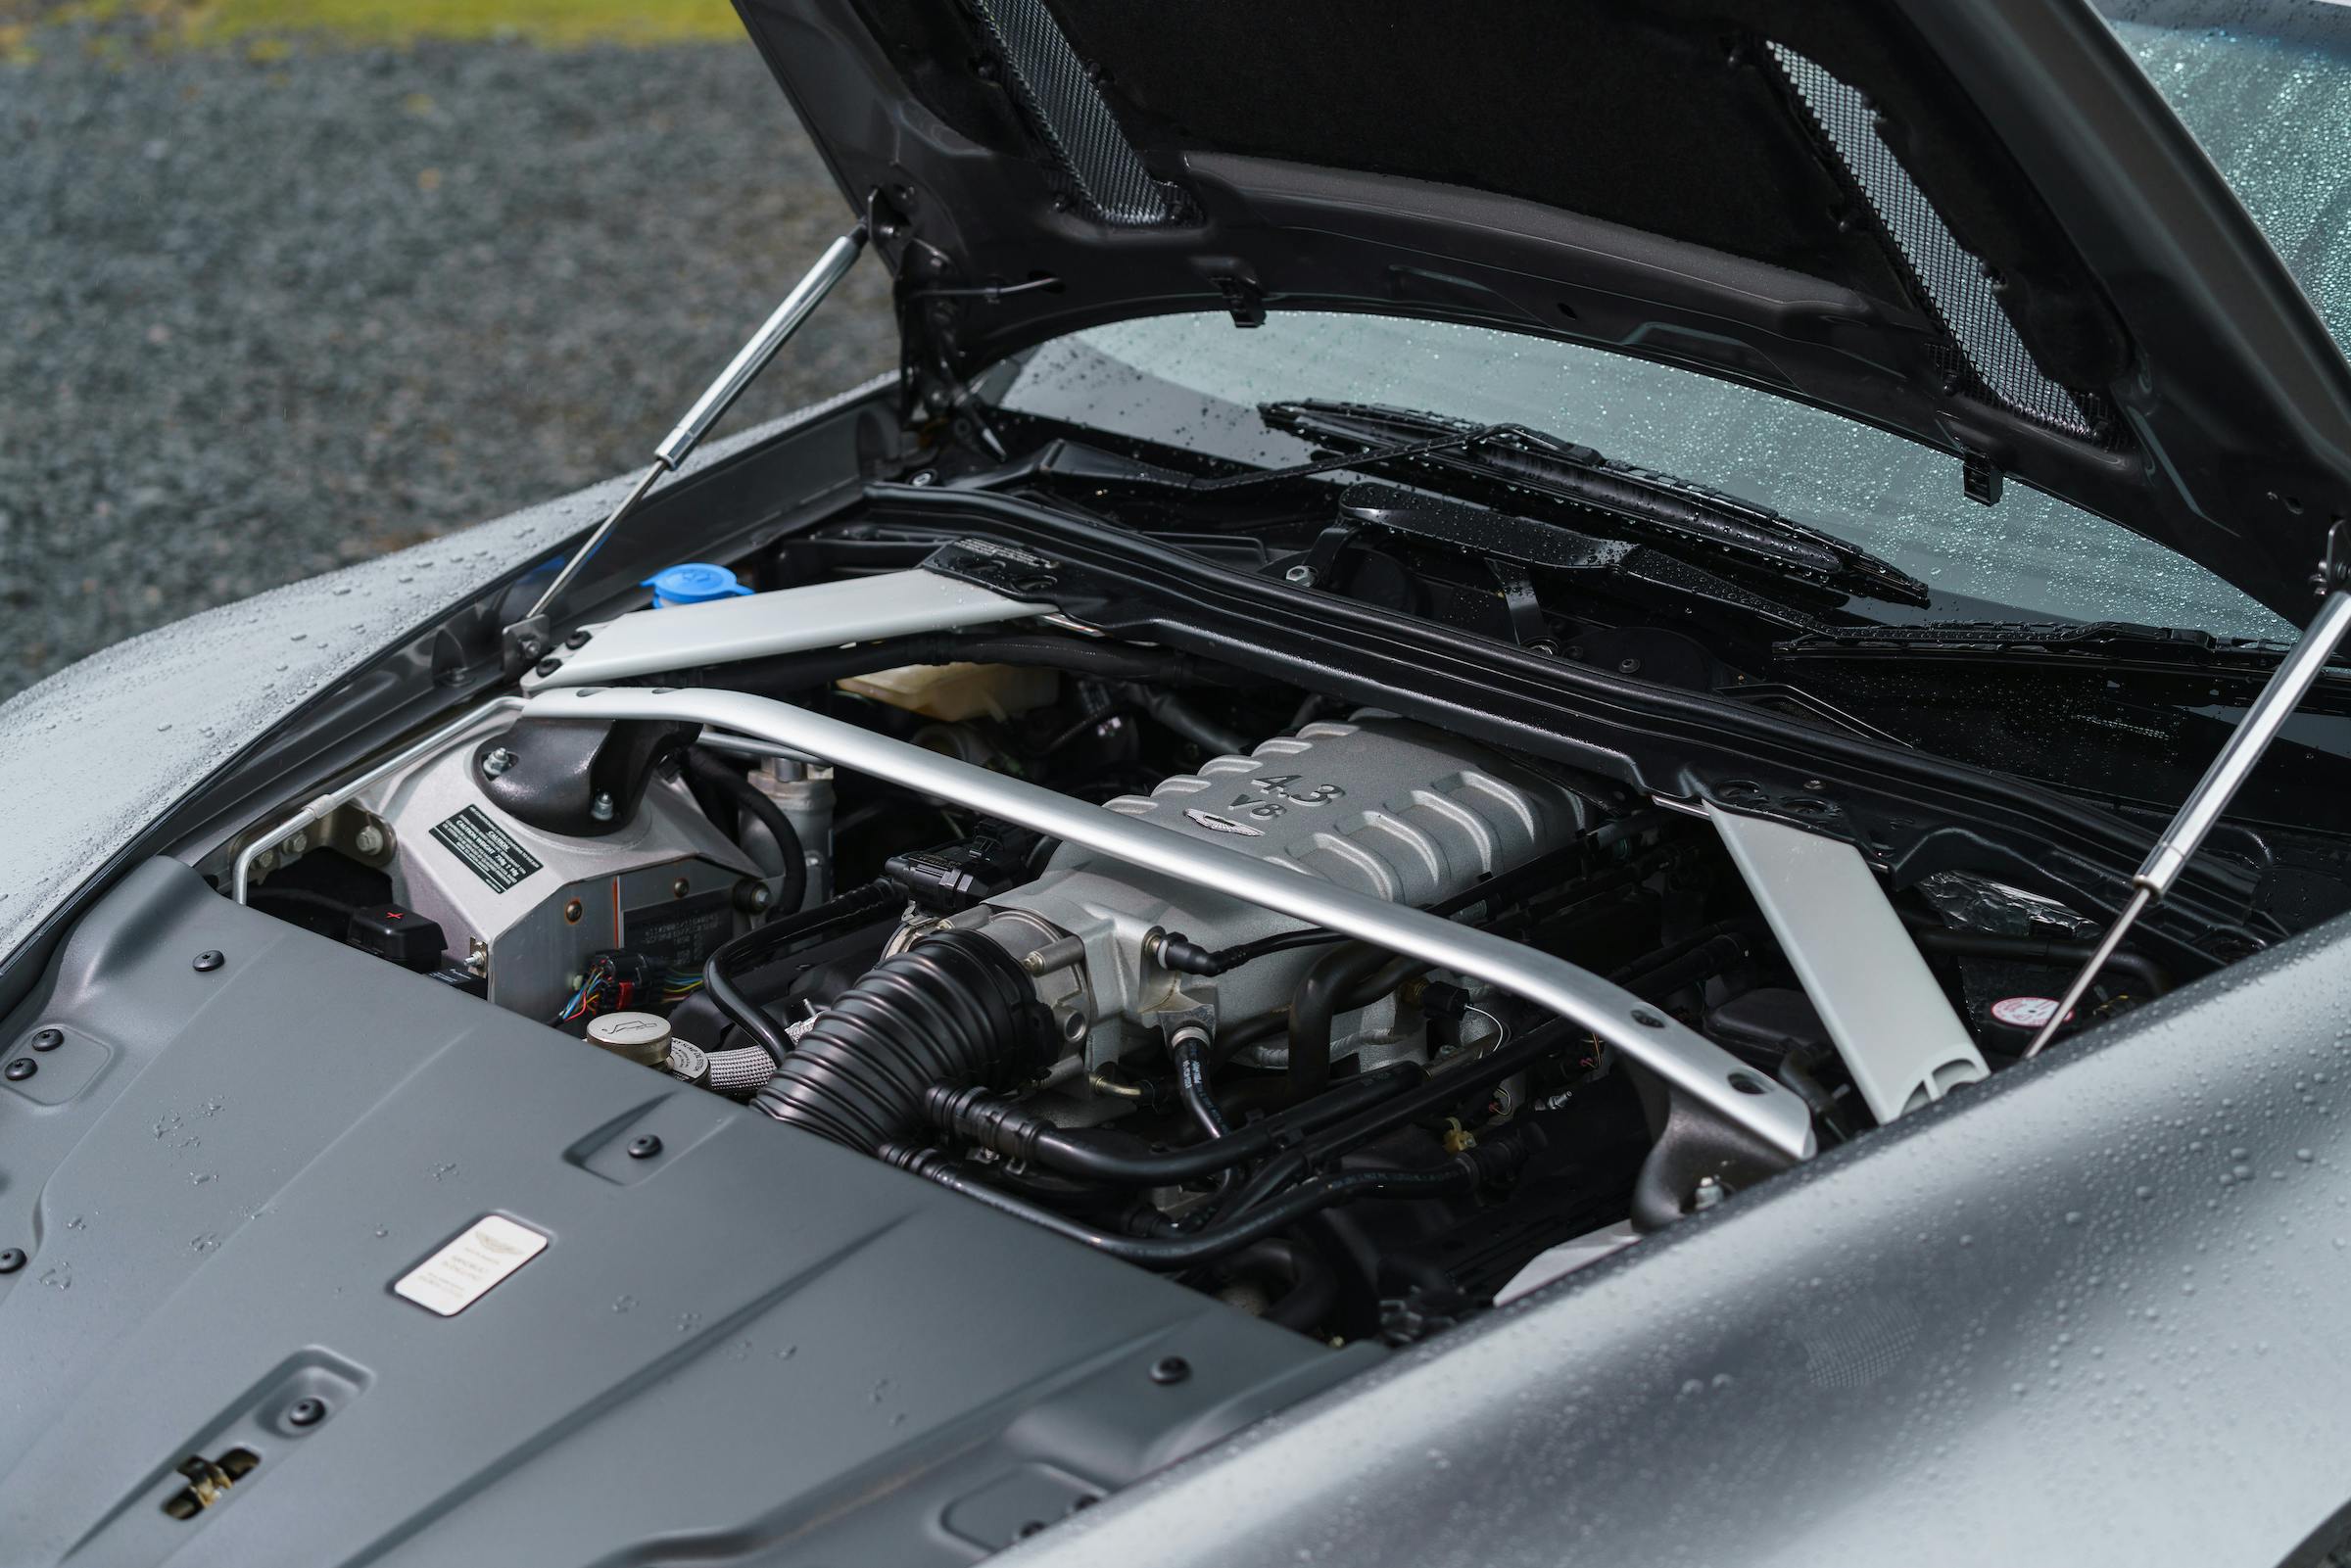 Aston Martin V8 Vantage engine bay